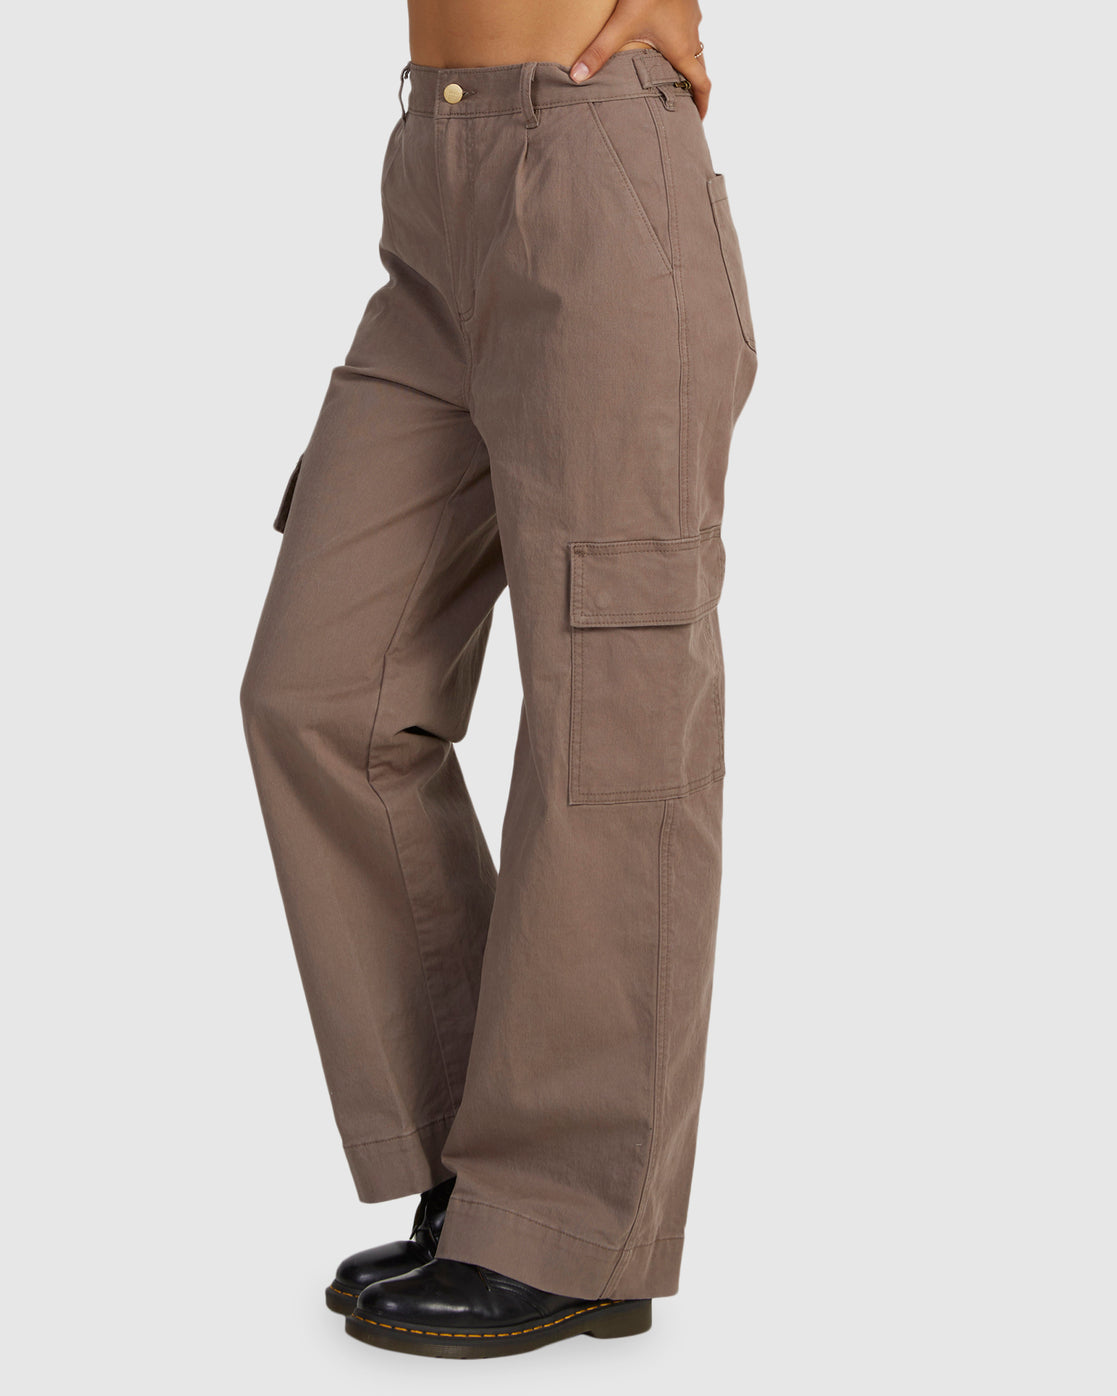 Fashion Men's Drawstring Ankle Cargo Pants Wide Leg Casual Pants | Mens  street style, Casual wide leg pants, Cargo pants